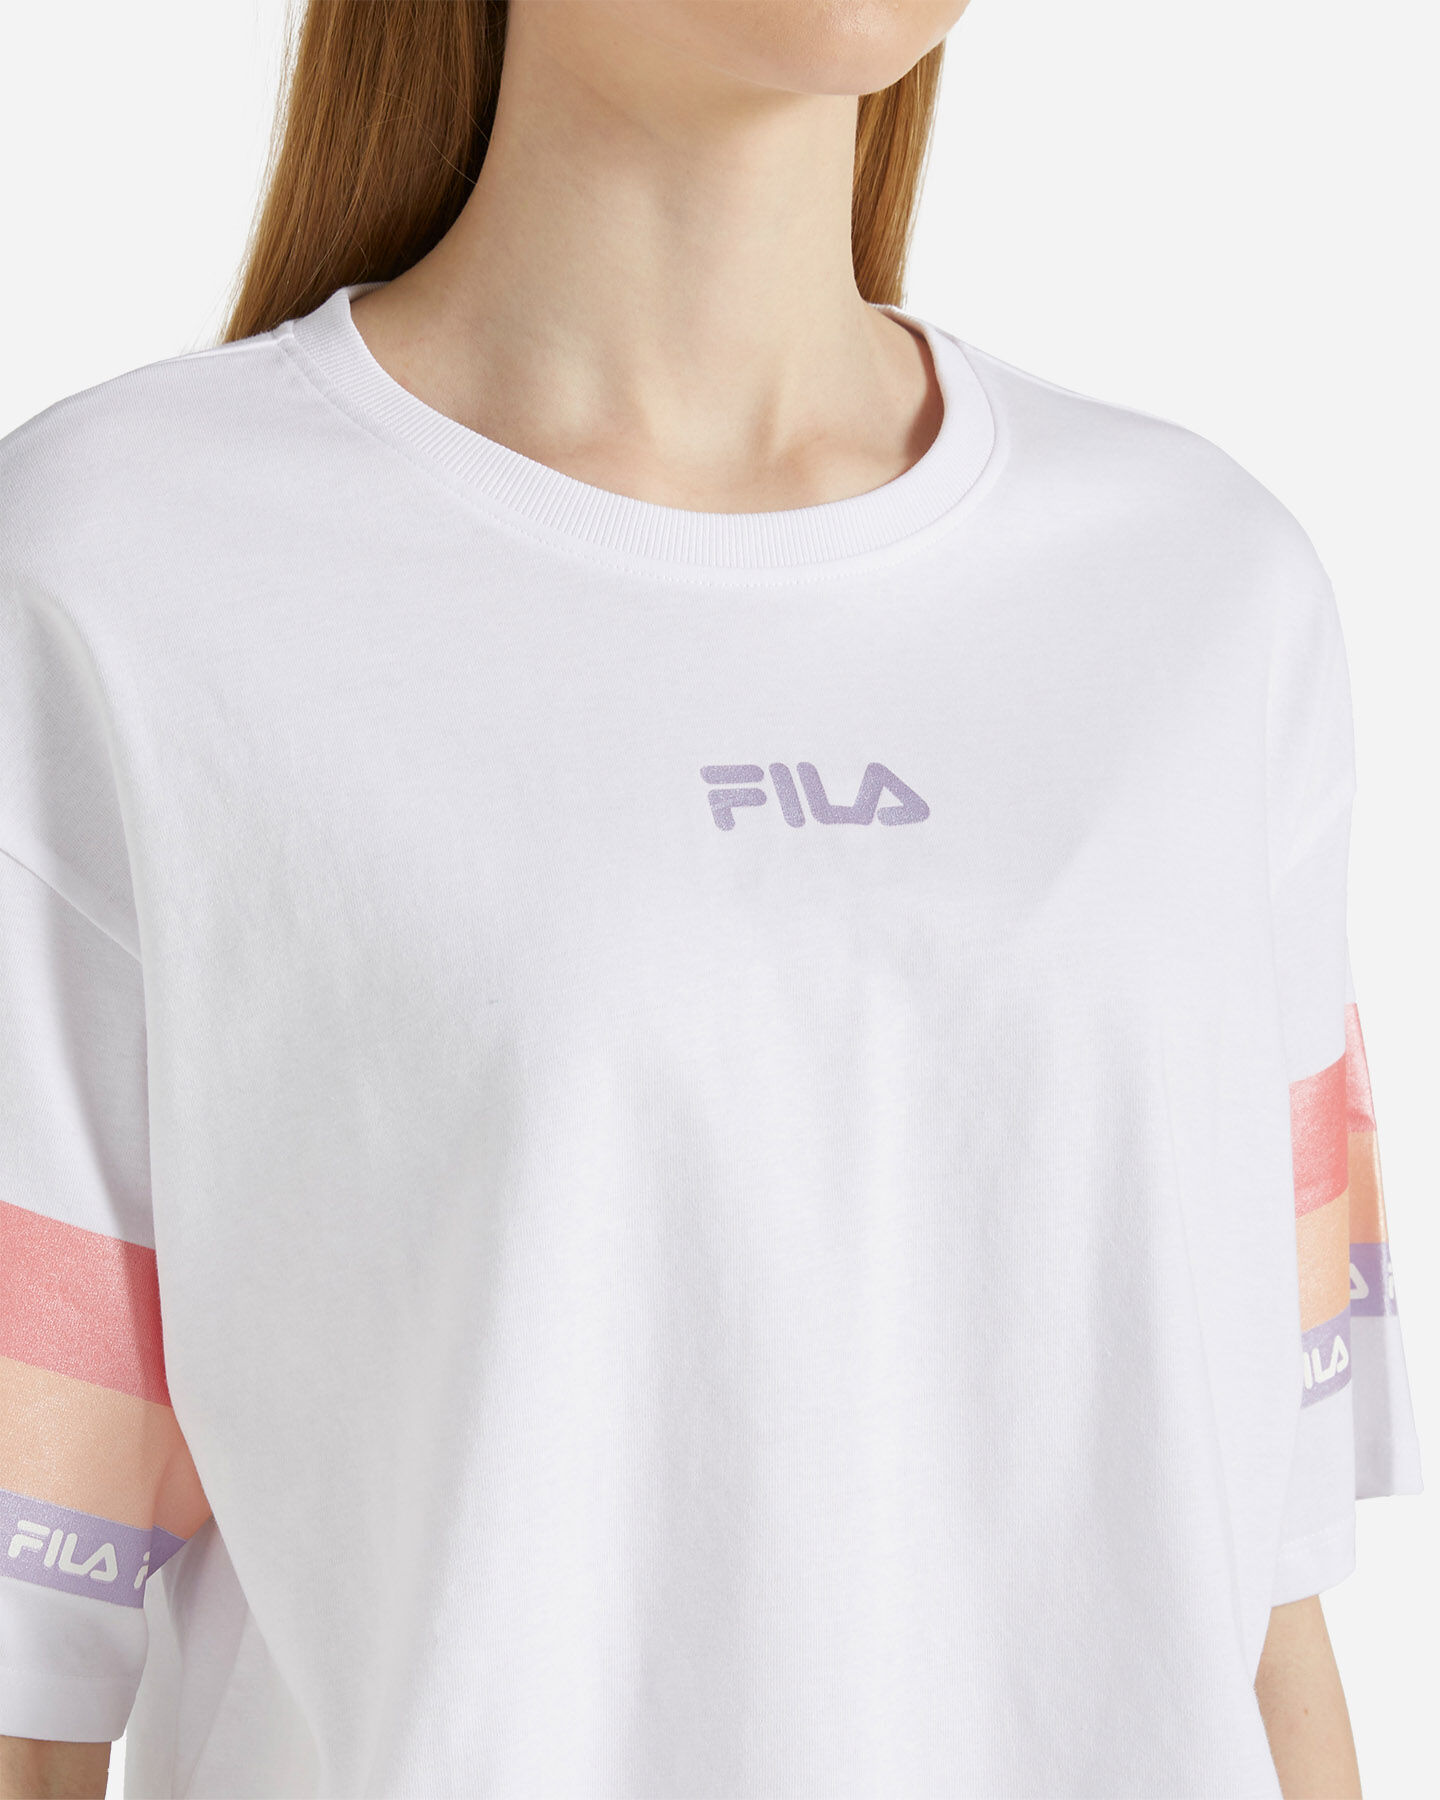  T-Shirt FILA GRAPHICS LOGO LINEA W S4100471|001|XS scatto 4